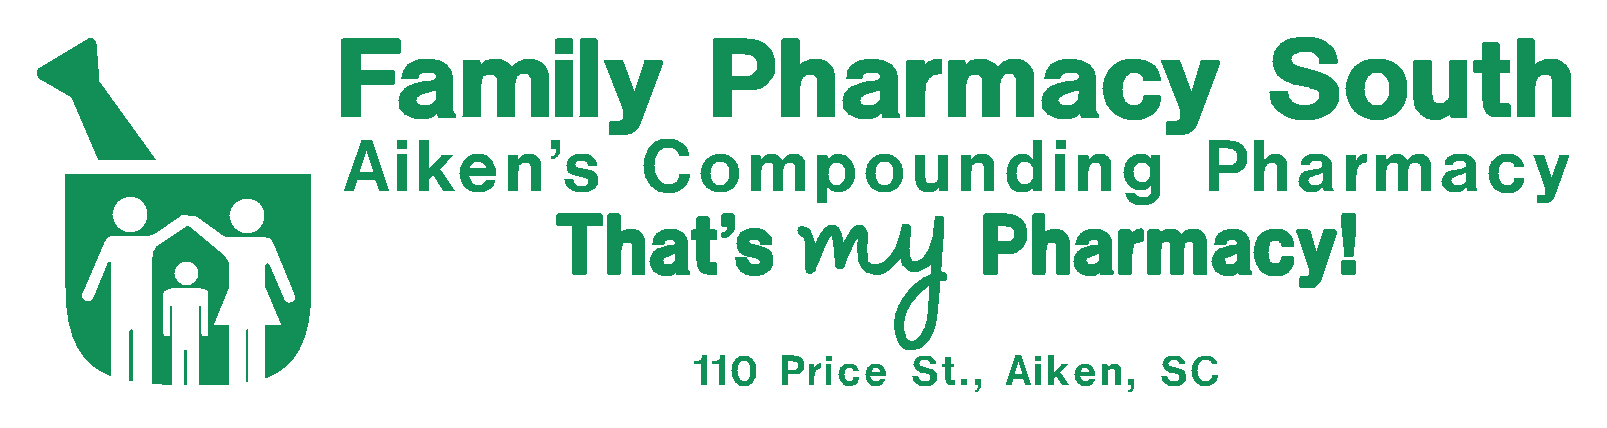 Family Pharmacy Price Ave